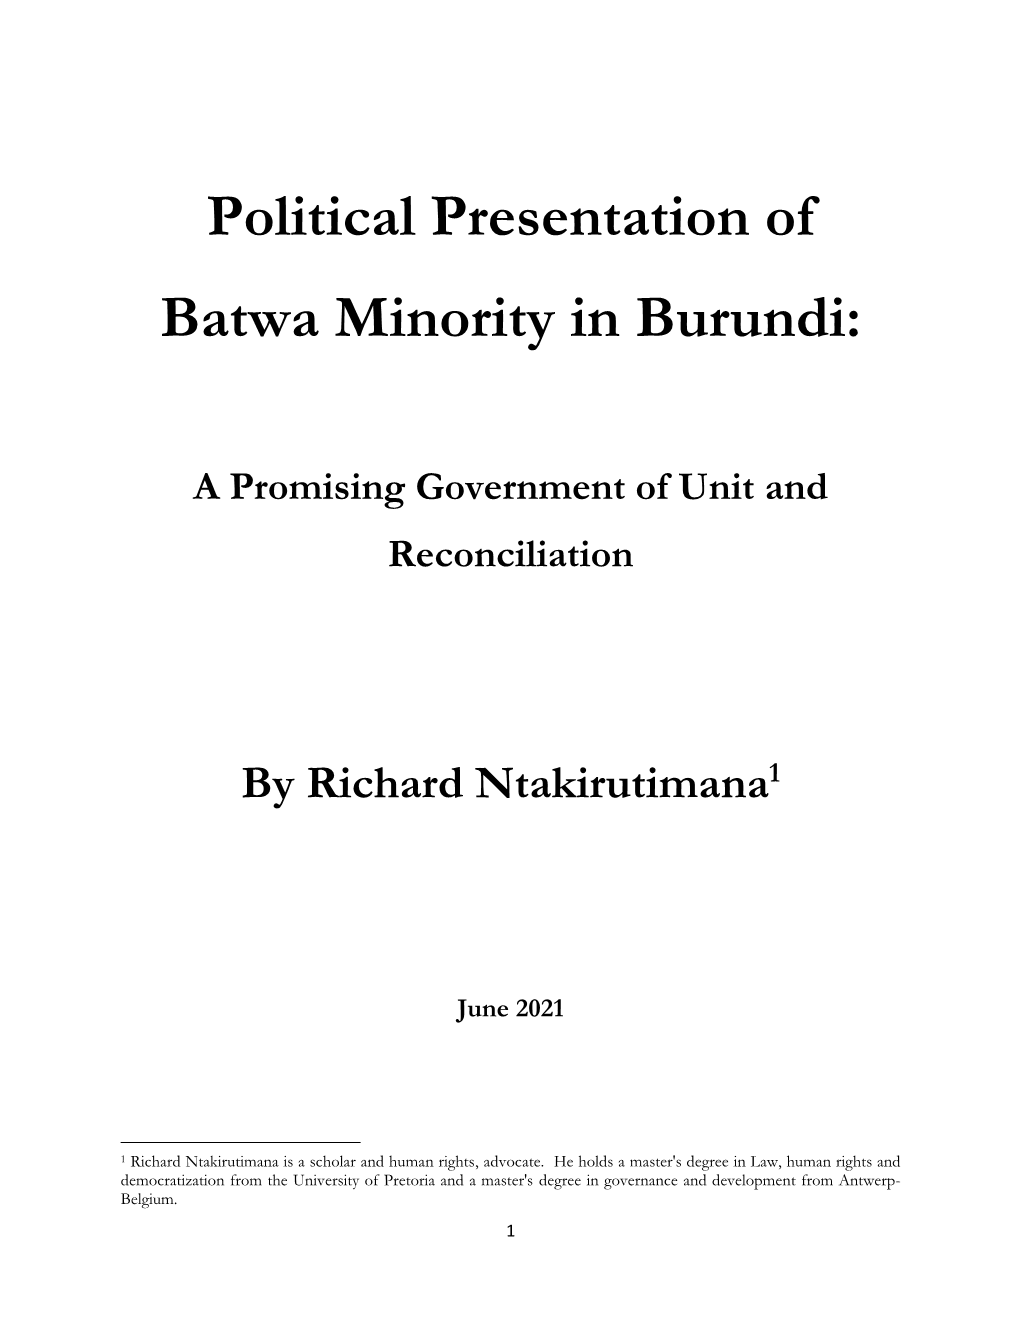 Political Presentation of Batwa Minority in Burundi